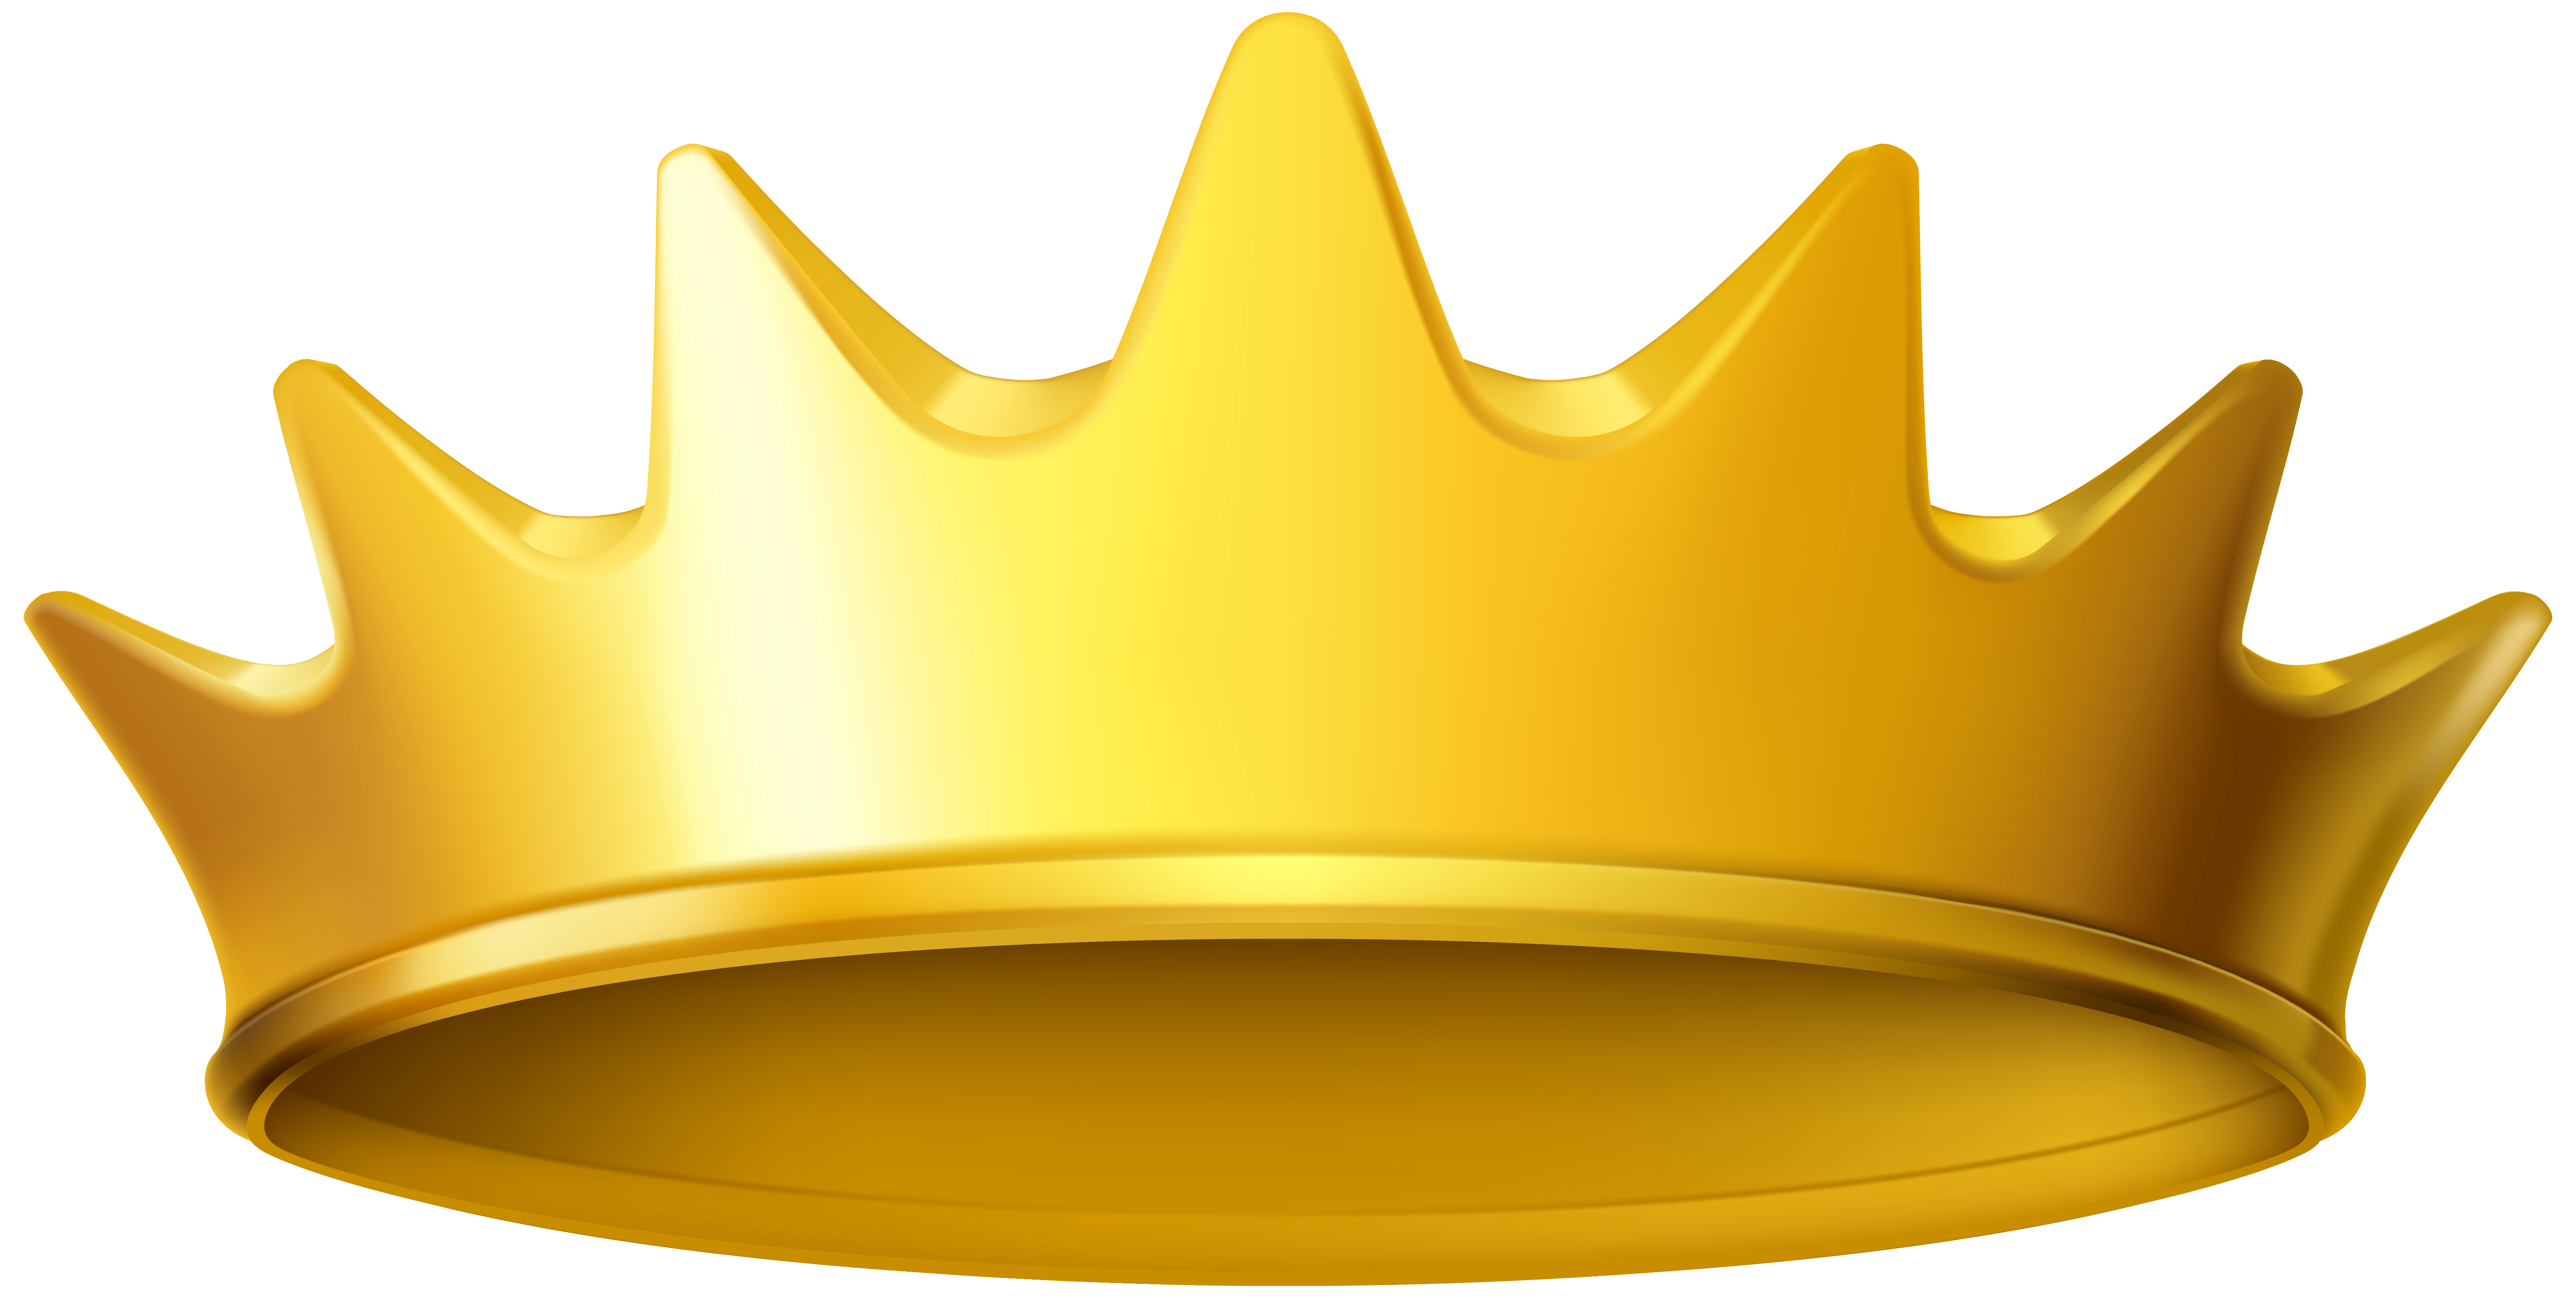 Golden crown clipart.